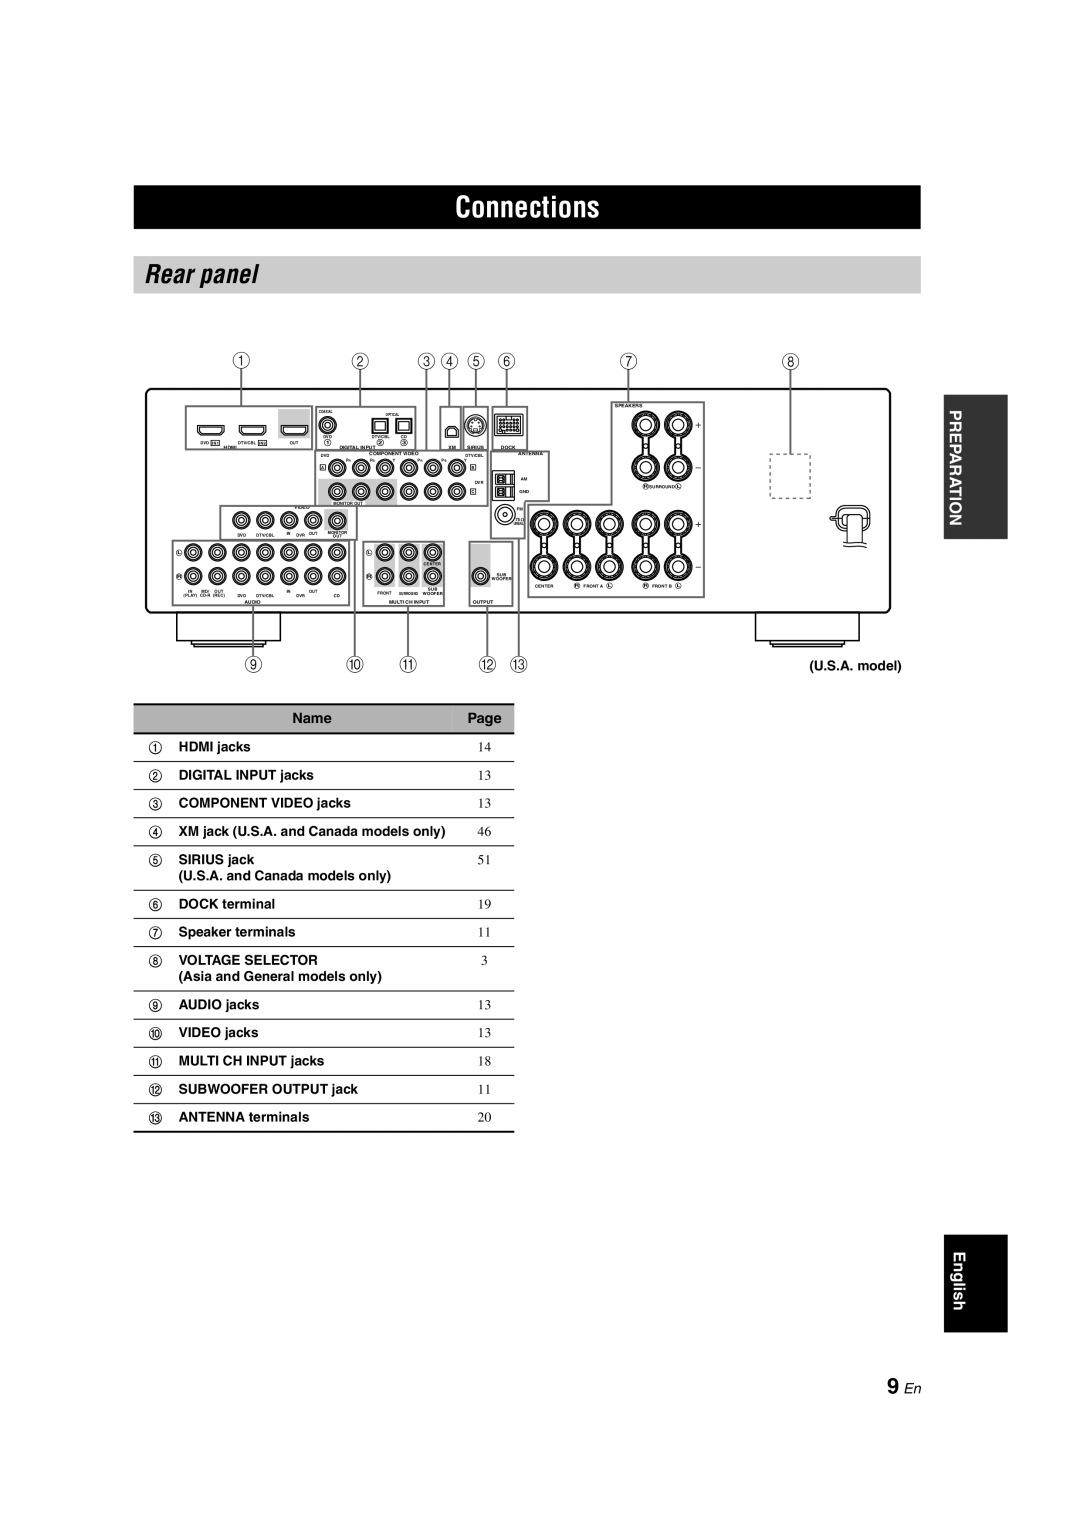 Yamaha HTR-6140 owner manual Connections, Rear panel, 9 En, 3 4 5 